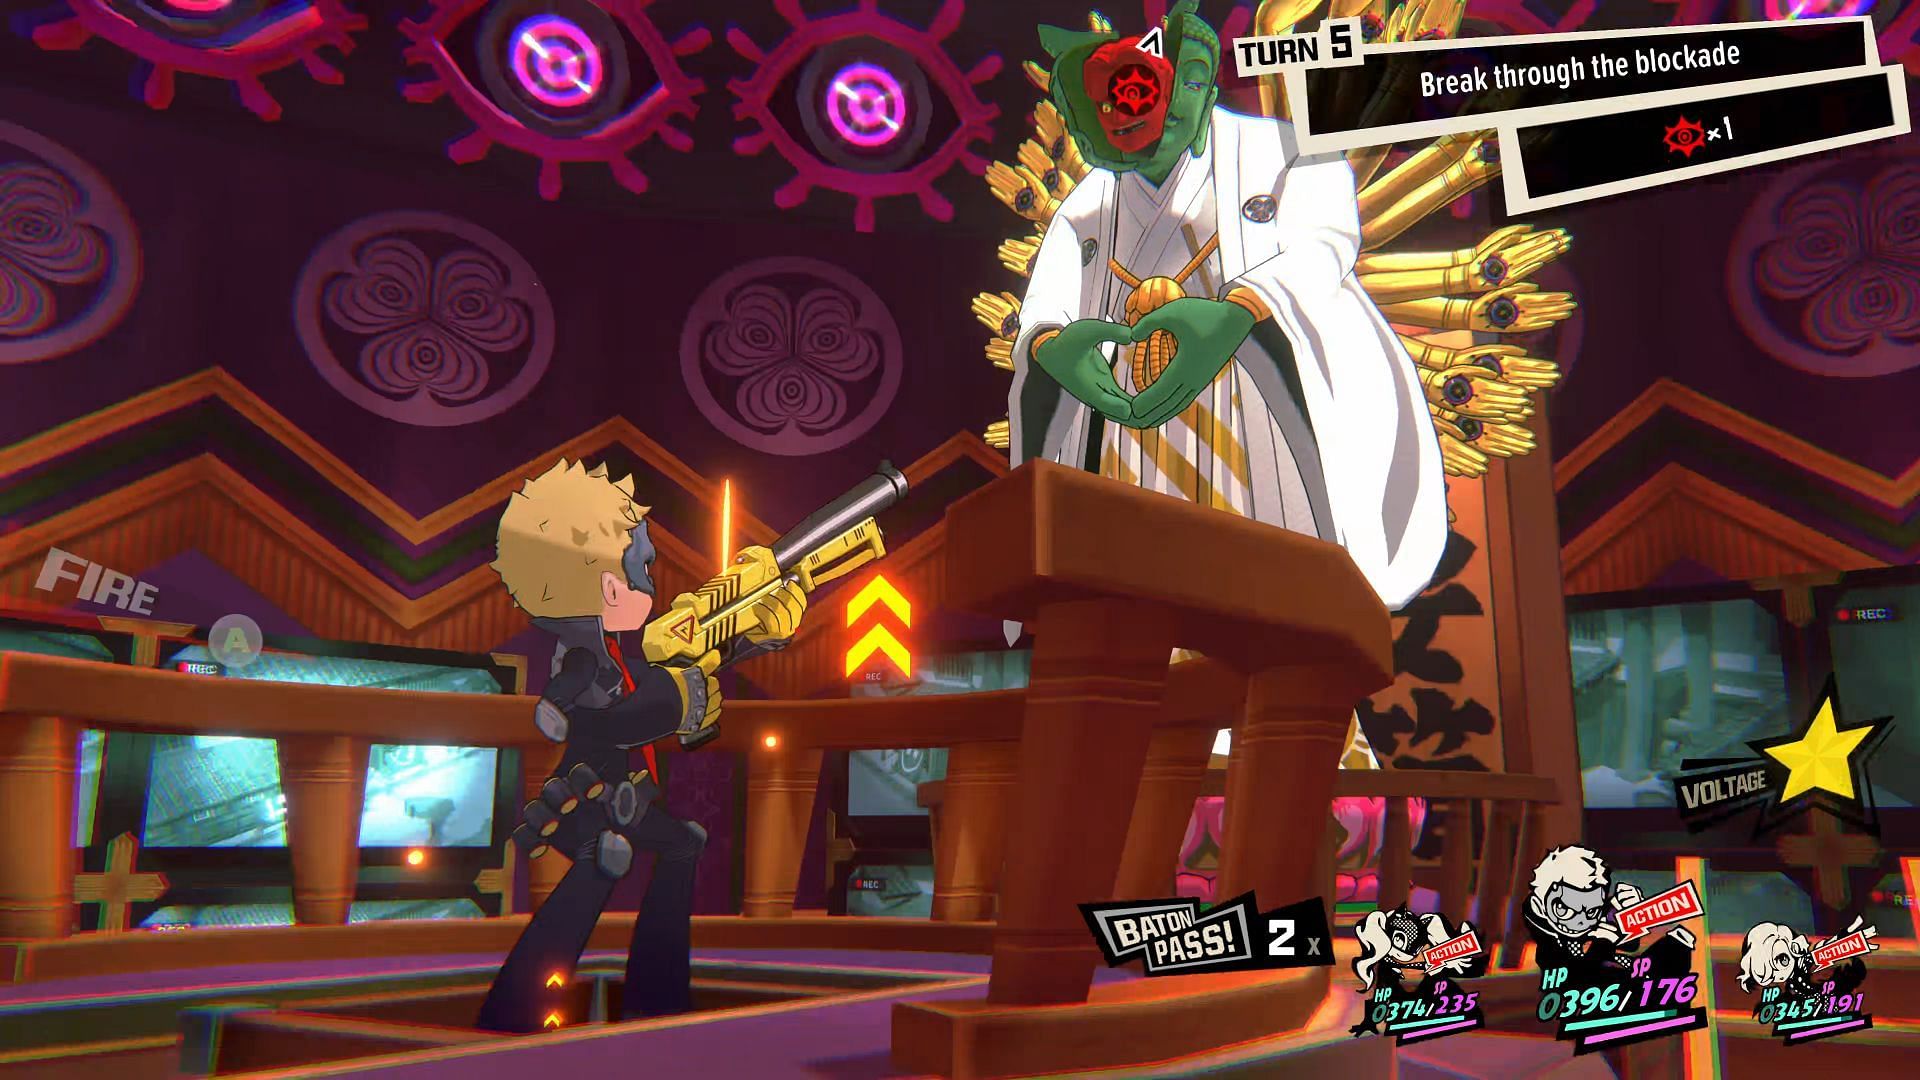 Shoot Yoshiki to reach Phase 2 (Image via Persona 5 Tactica)